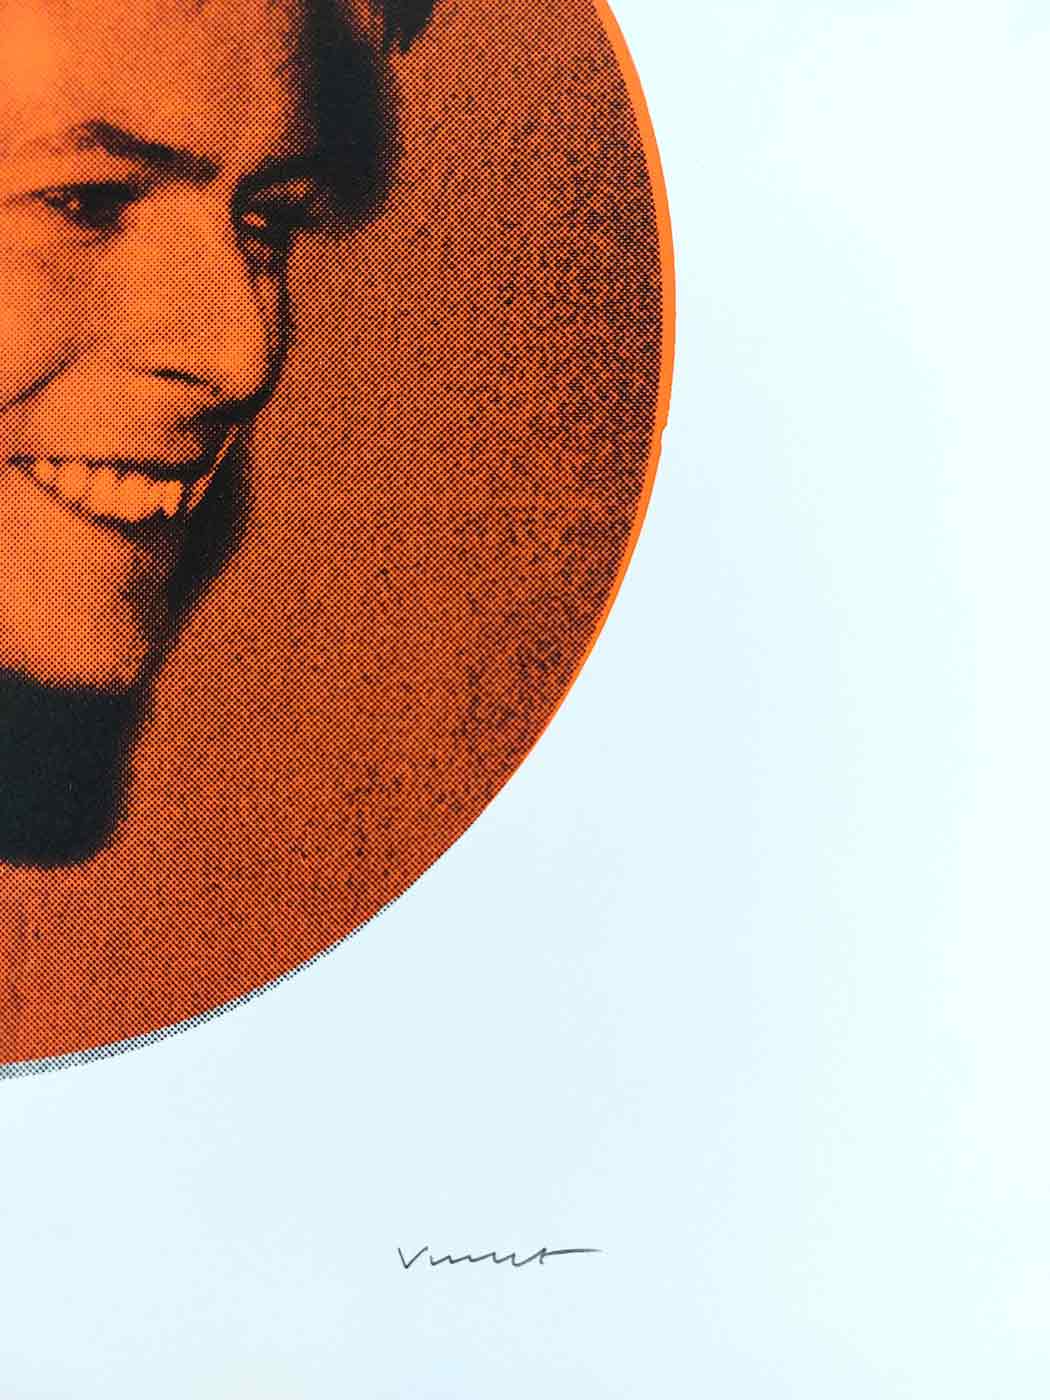 David Bowie Café Royal - Orange Enlarged